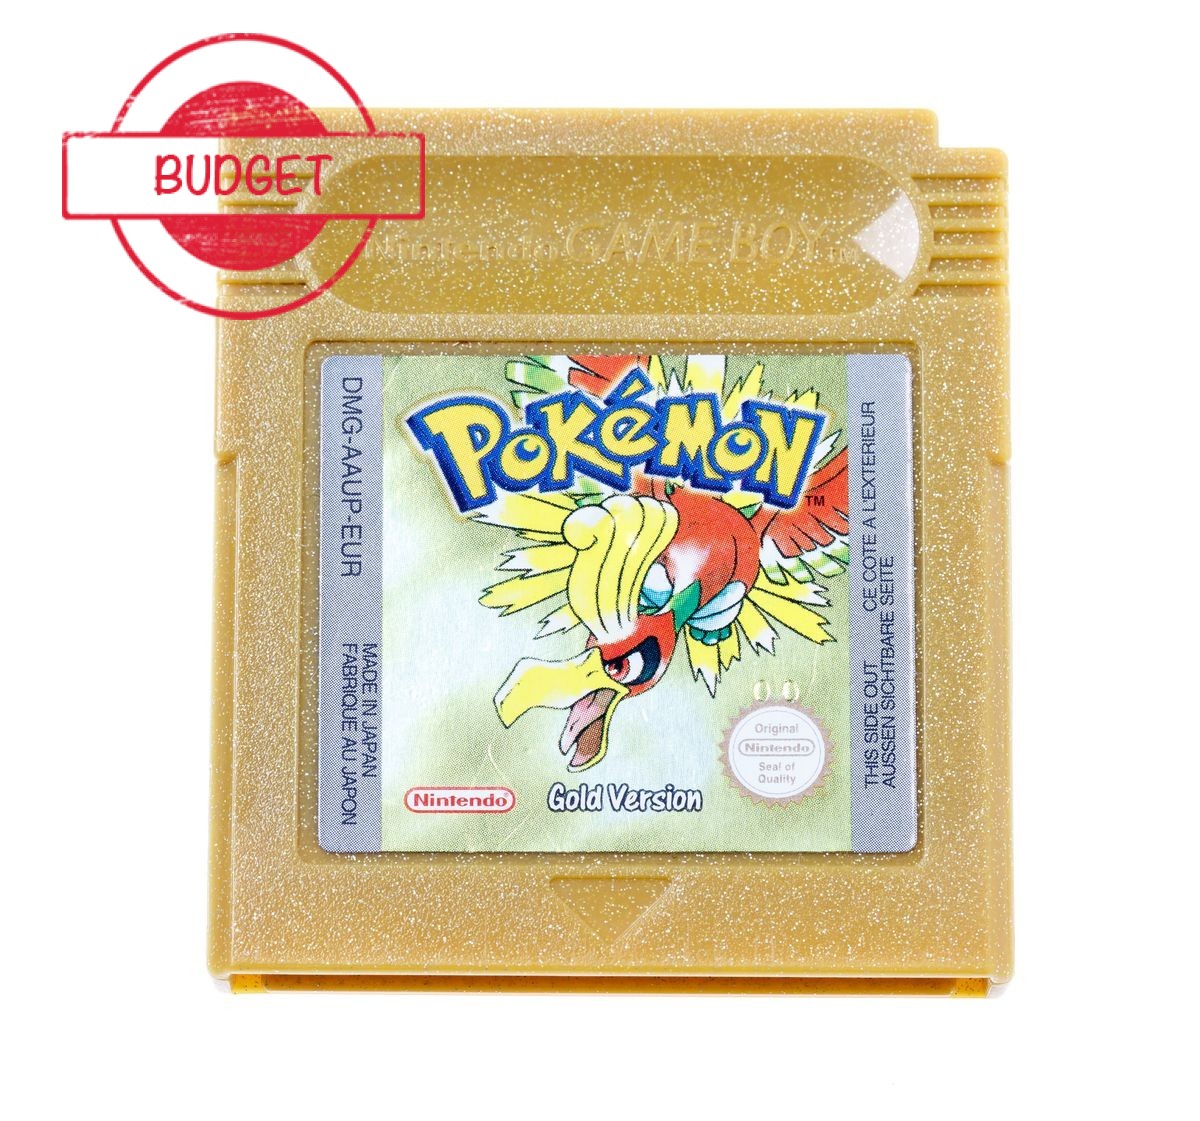 Pokemon Gold (German) - Budget - Gameboy Color Games